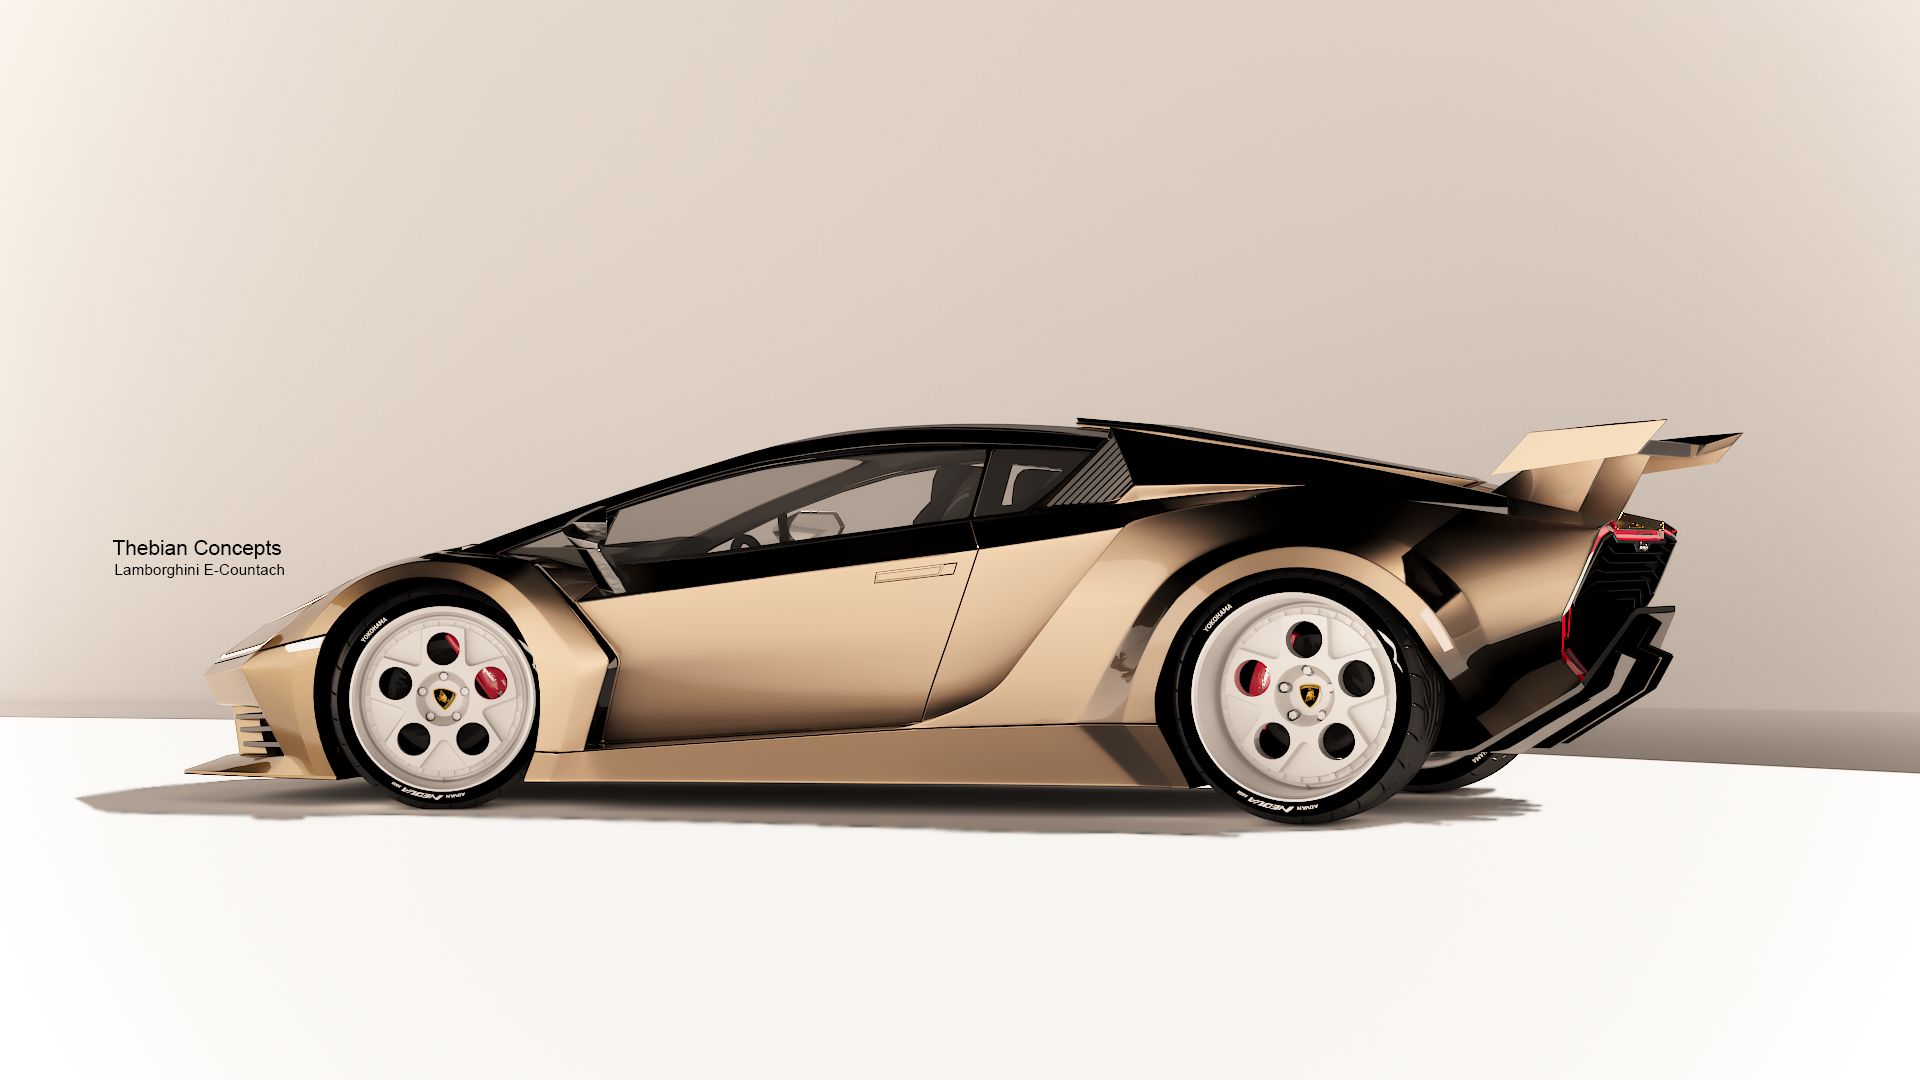 Laden Sie das Lamborghini, Lamborghini Countach, Fahrzeuge-Bild kostenlos auf Ihren PC-Desktop herunter